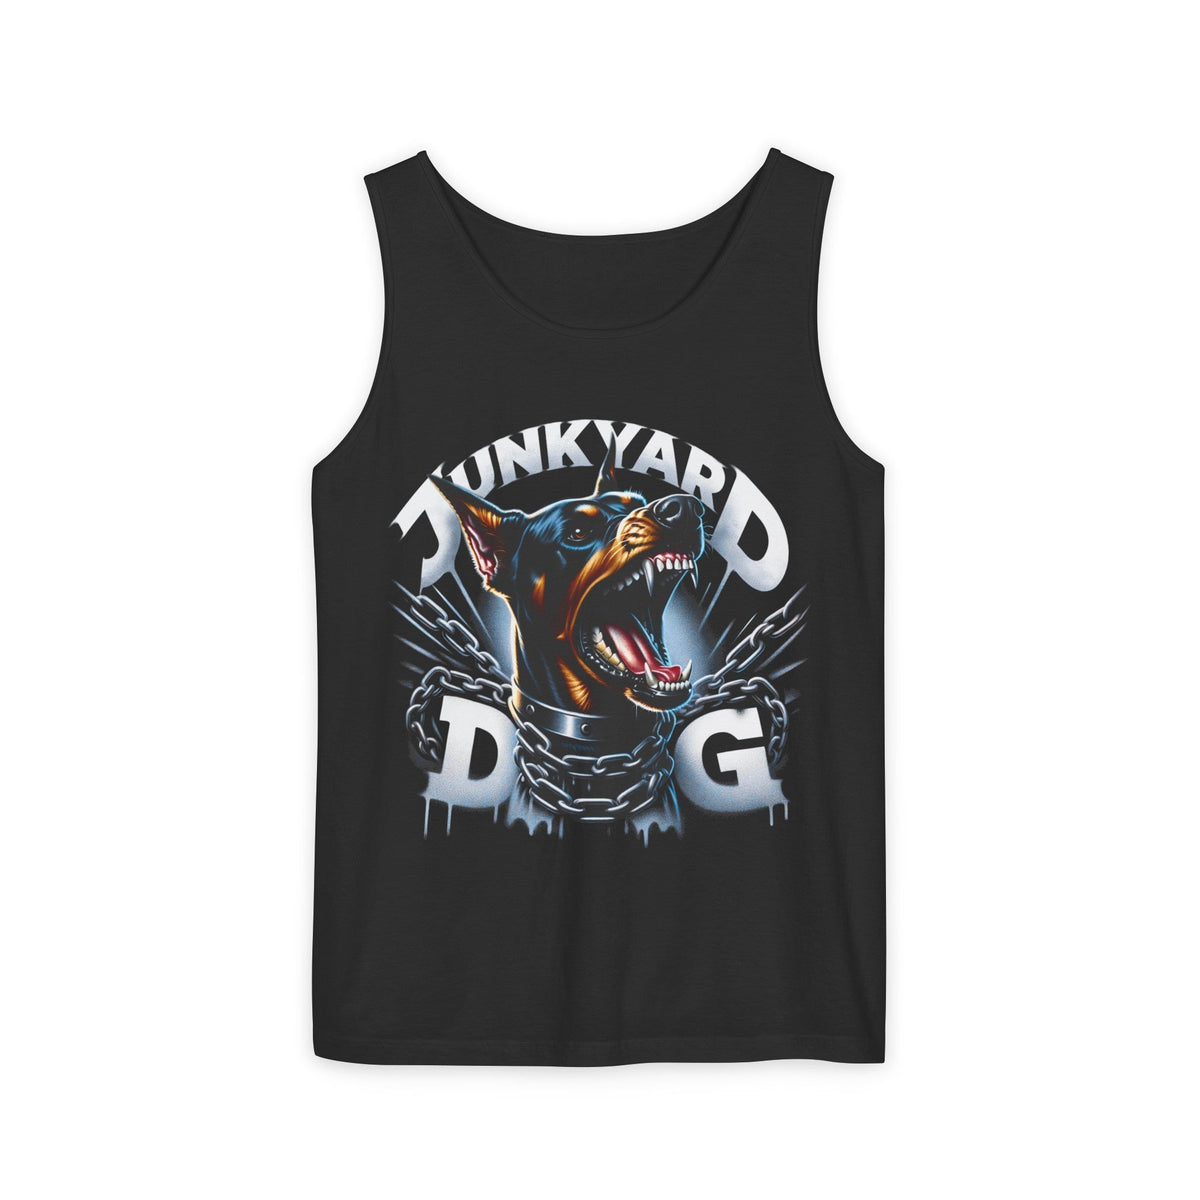 Junkyard Dog Unisex Garment - Dyed Tank Top - Goth Cloth Co.Tank Top76163609485163695888